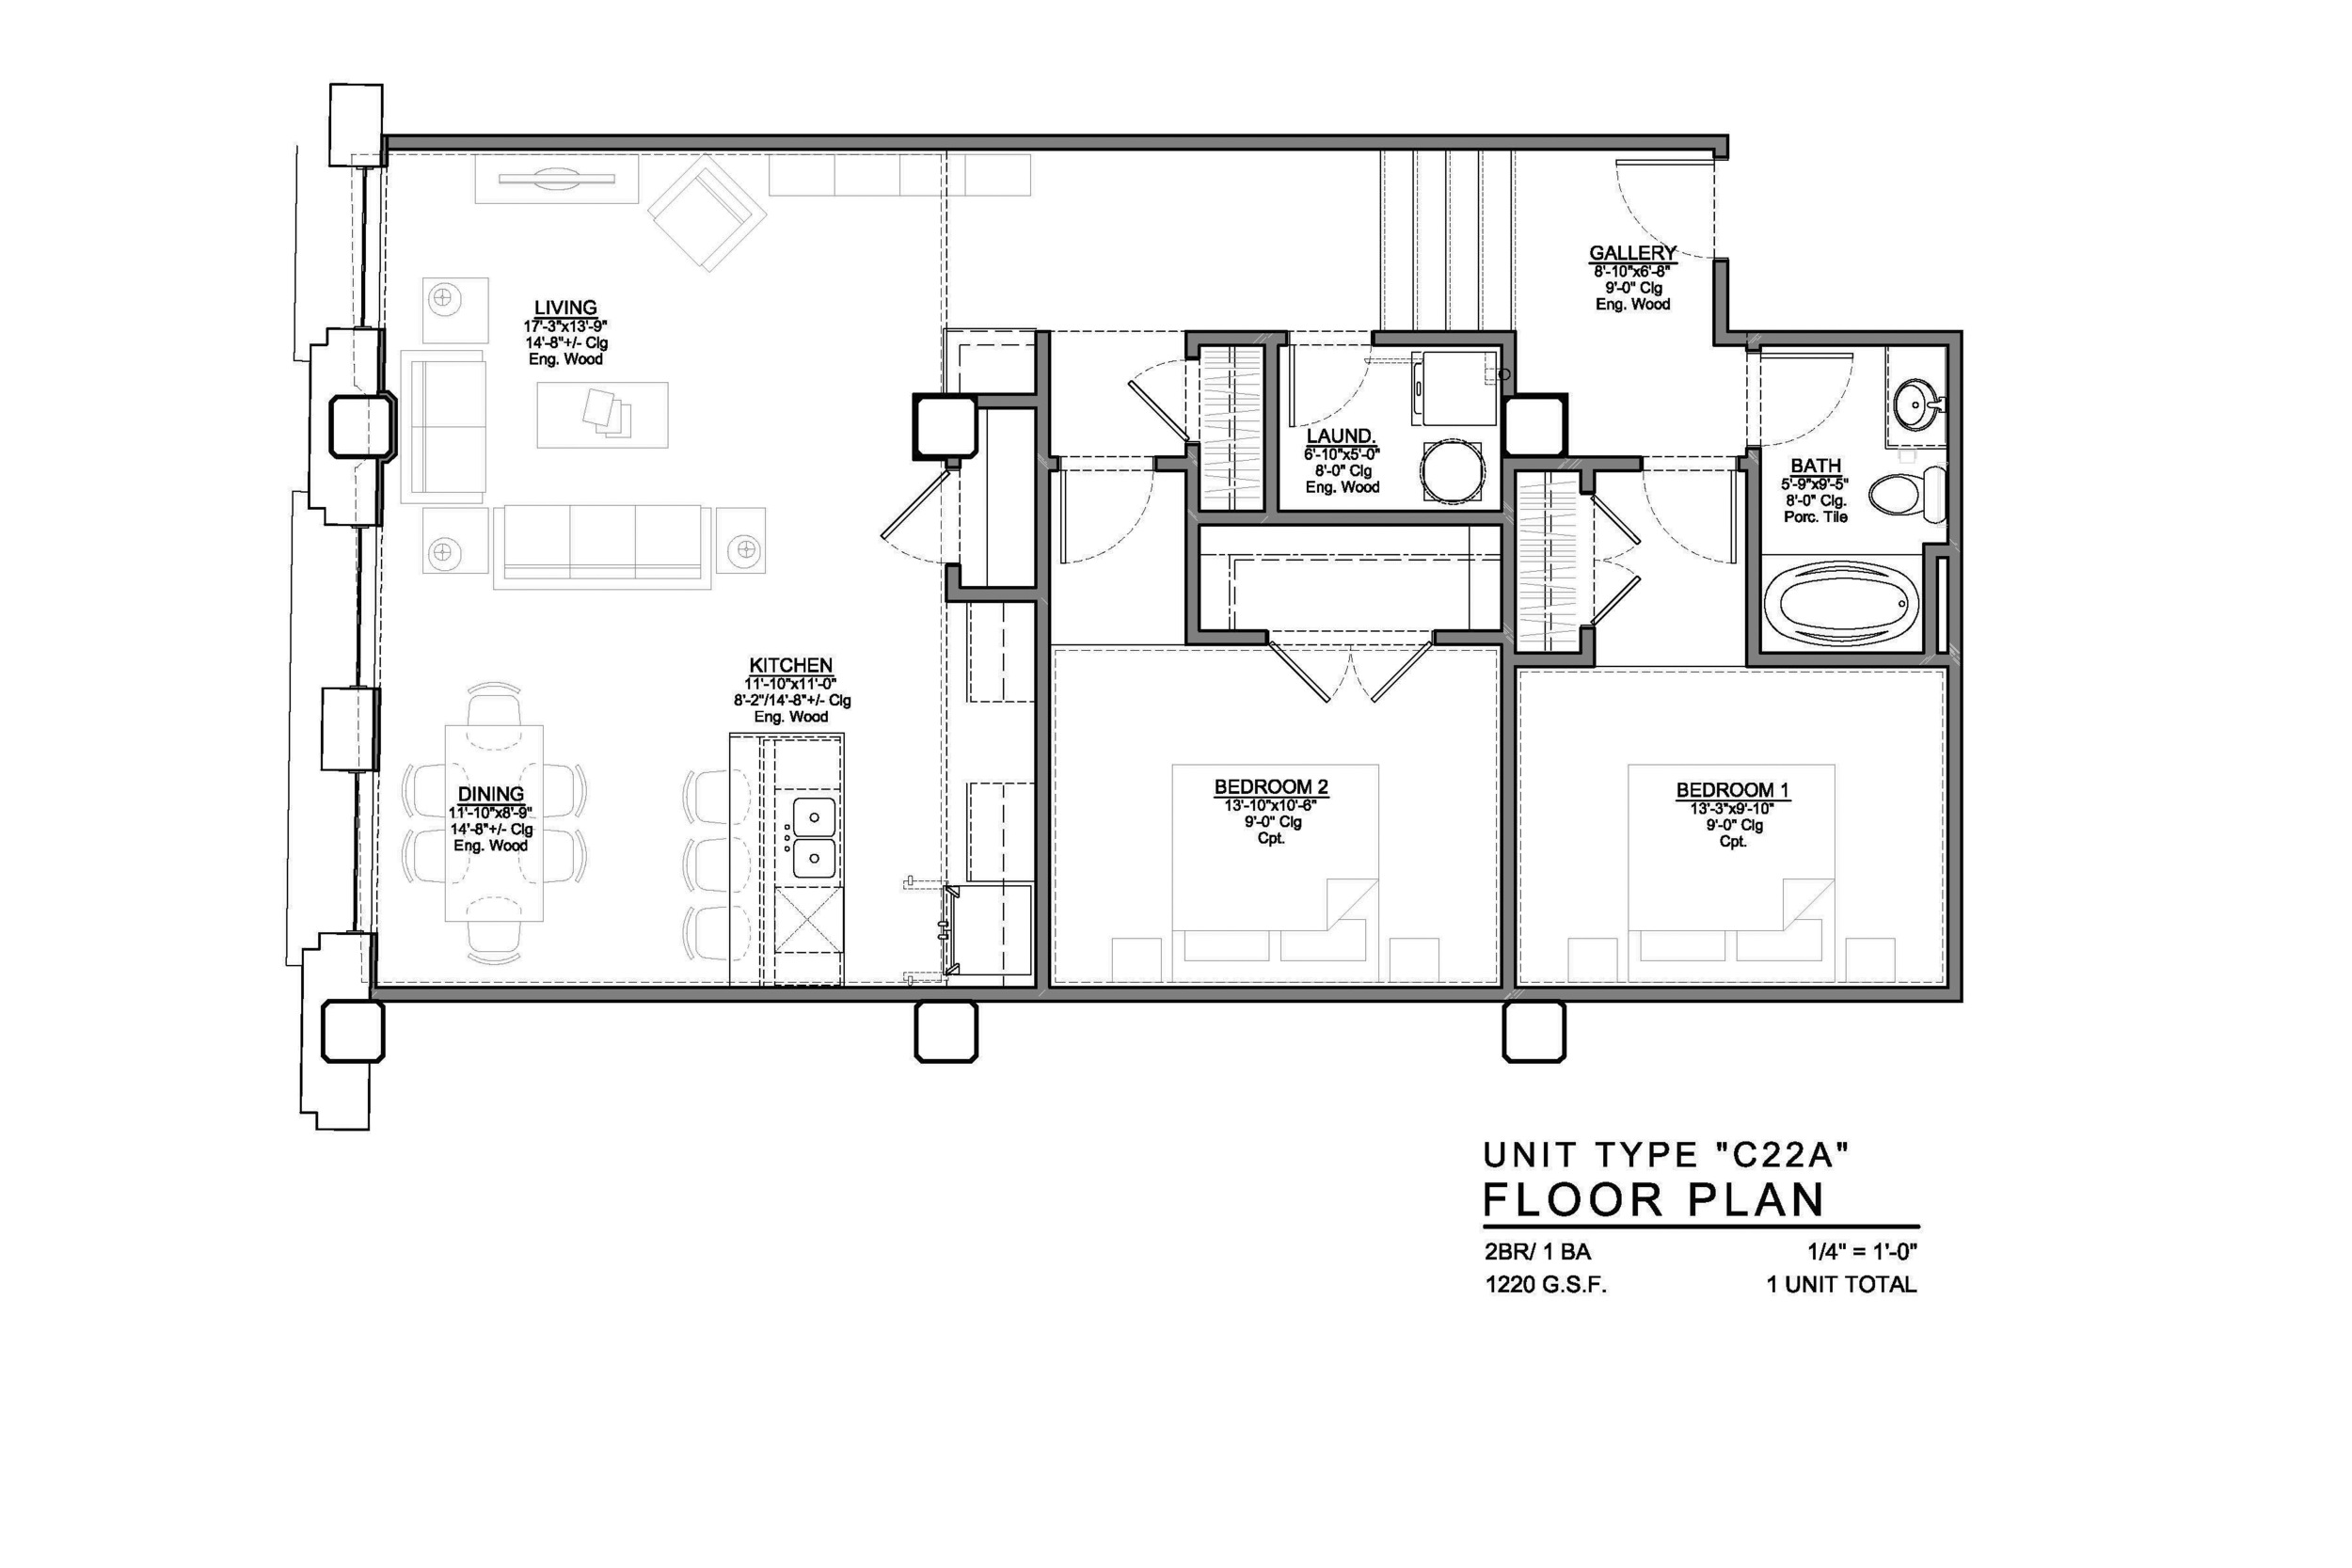 C22A FLOOR PLAN: 2 BEDROOM / 1 BATH